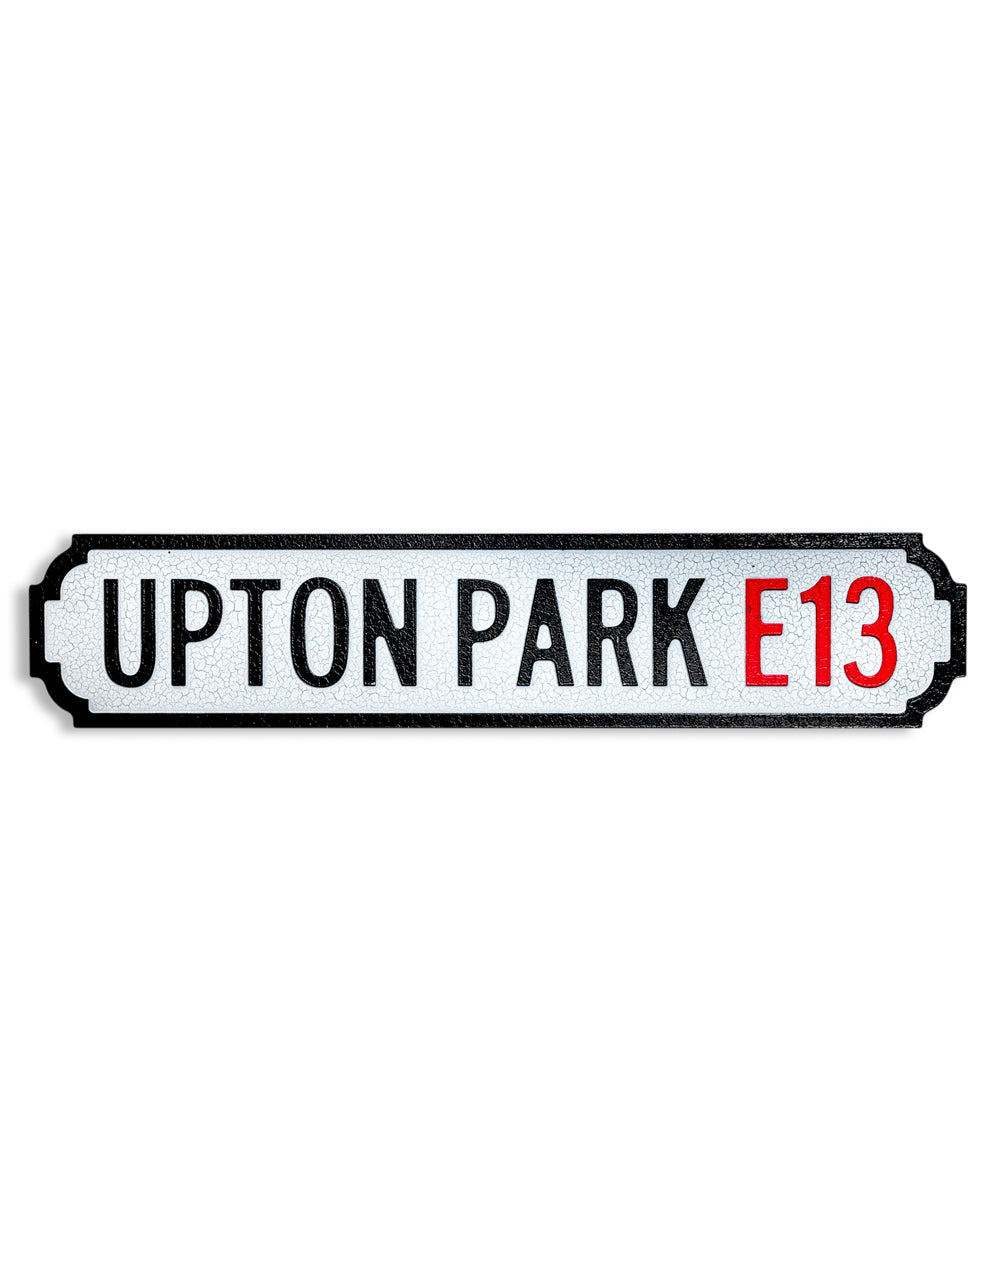 Antiqued Wooden "Upton Park E13" Road Sign